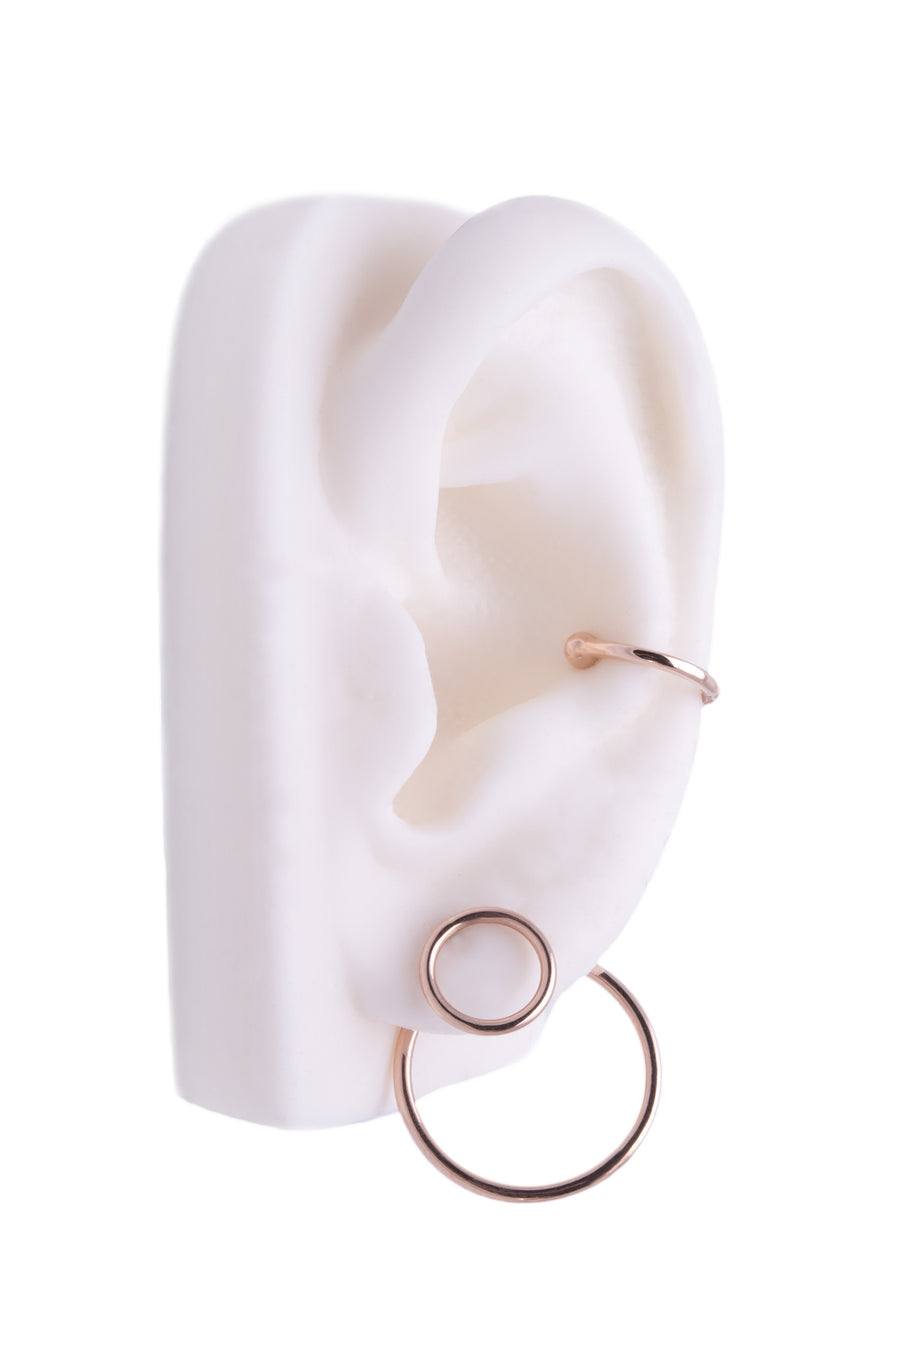 Barbell Ear Cuff Single Earring No piercing Orbital Snug Inner Conch Wendy Nichol Fine Jewelry Designer Handmade in NYC solid 14k Gold Sterling Silver